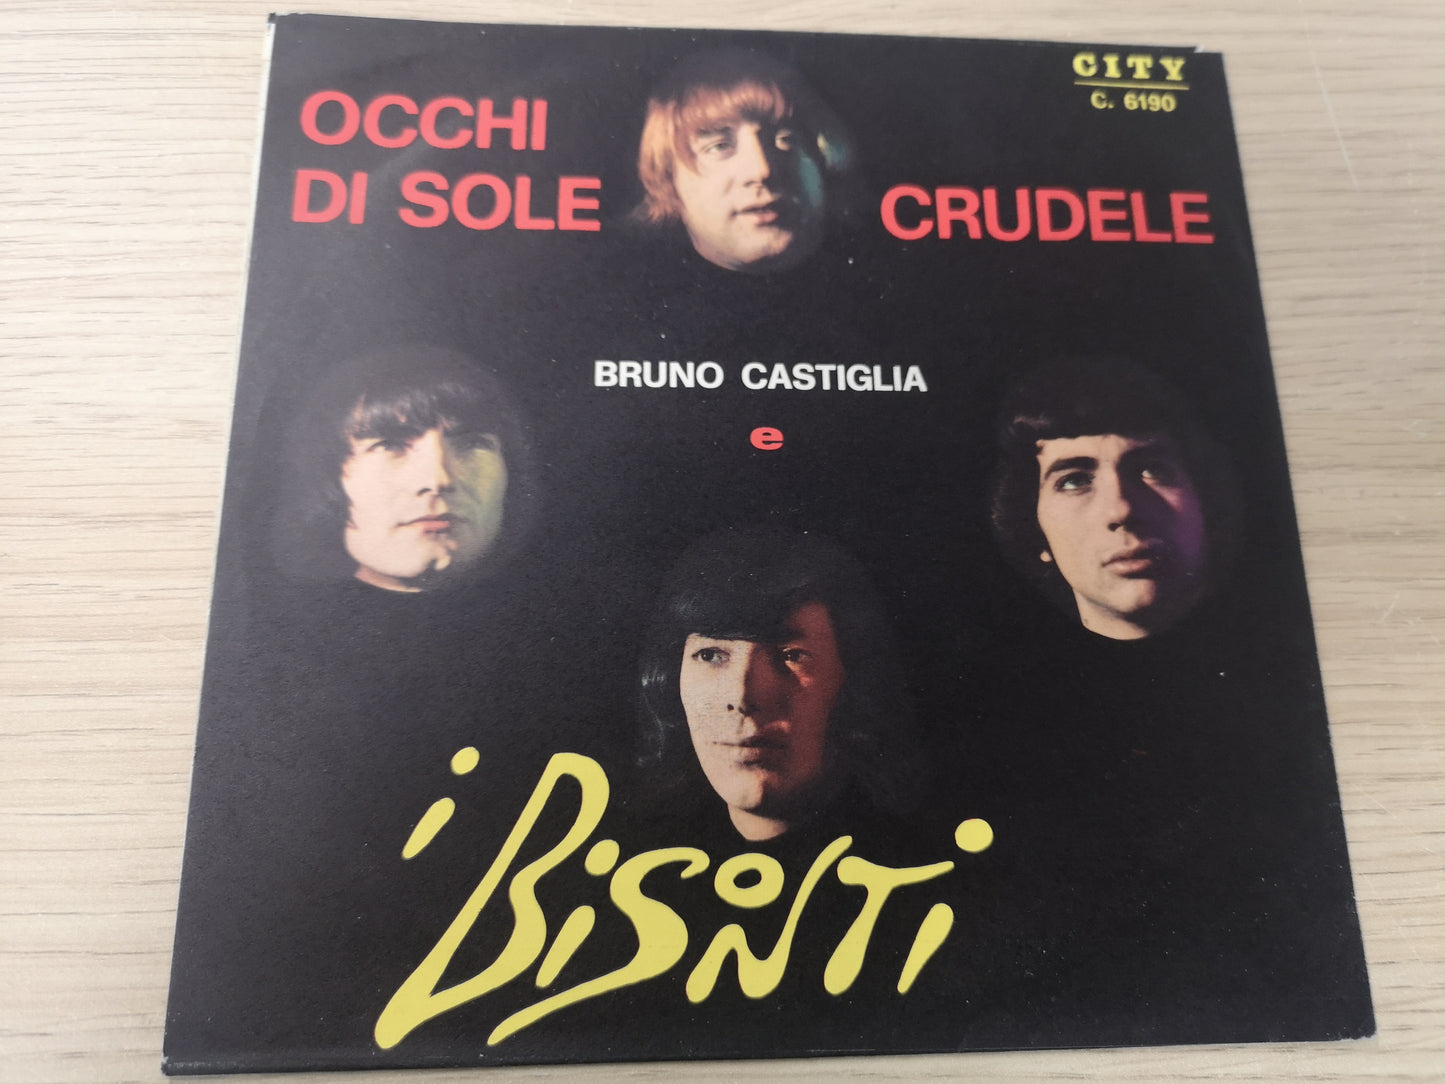 I Bisonti "Crudele" Orig Italy 1967 M-/M- (7" Single)